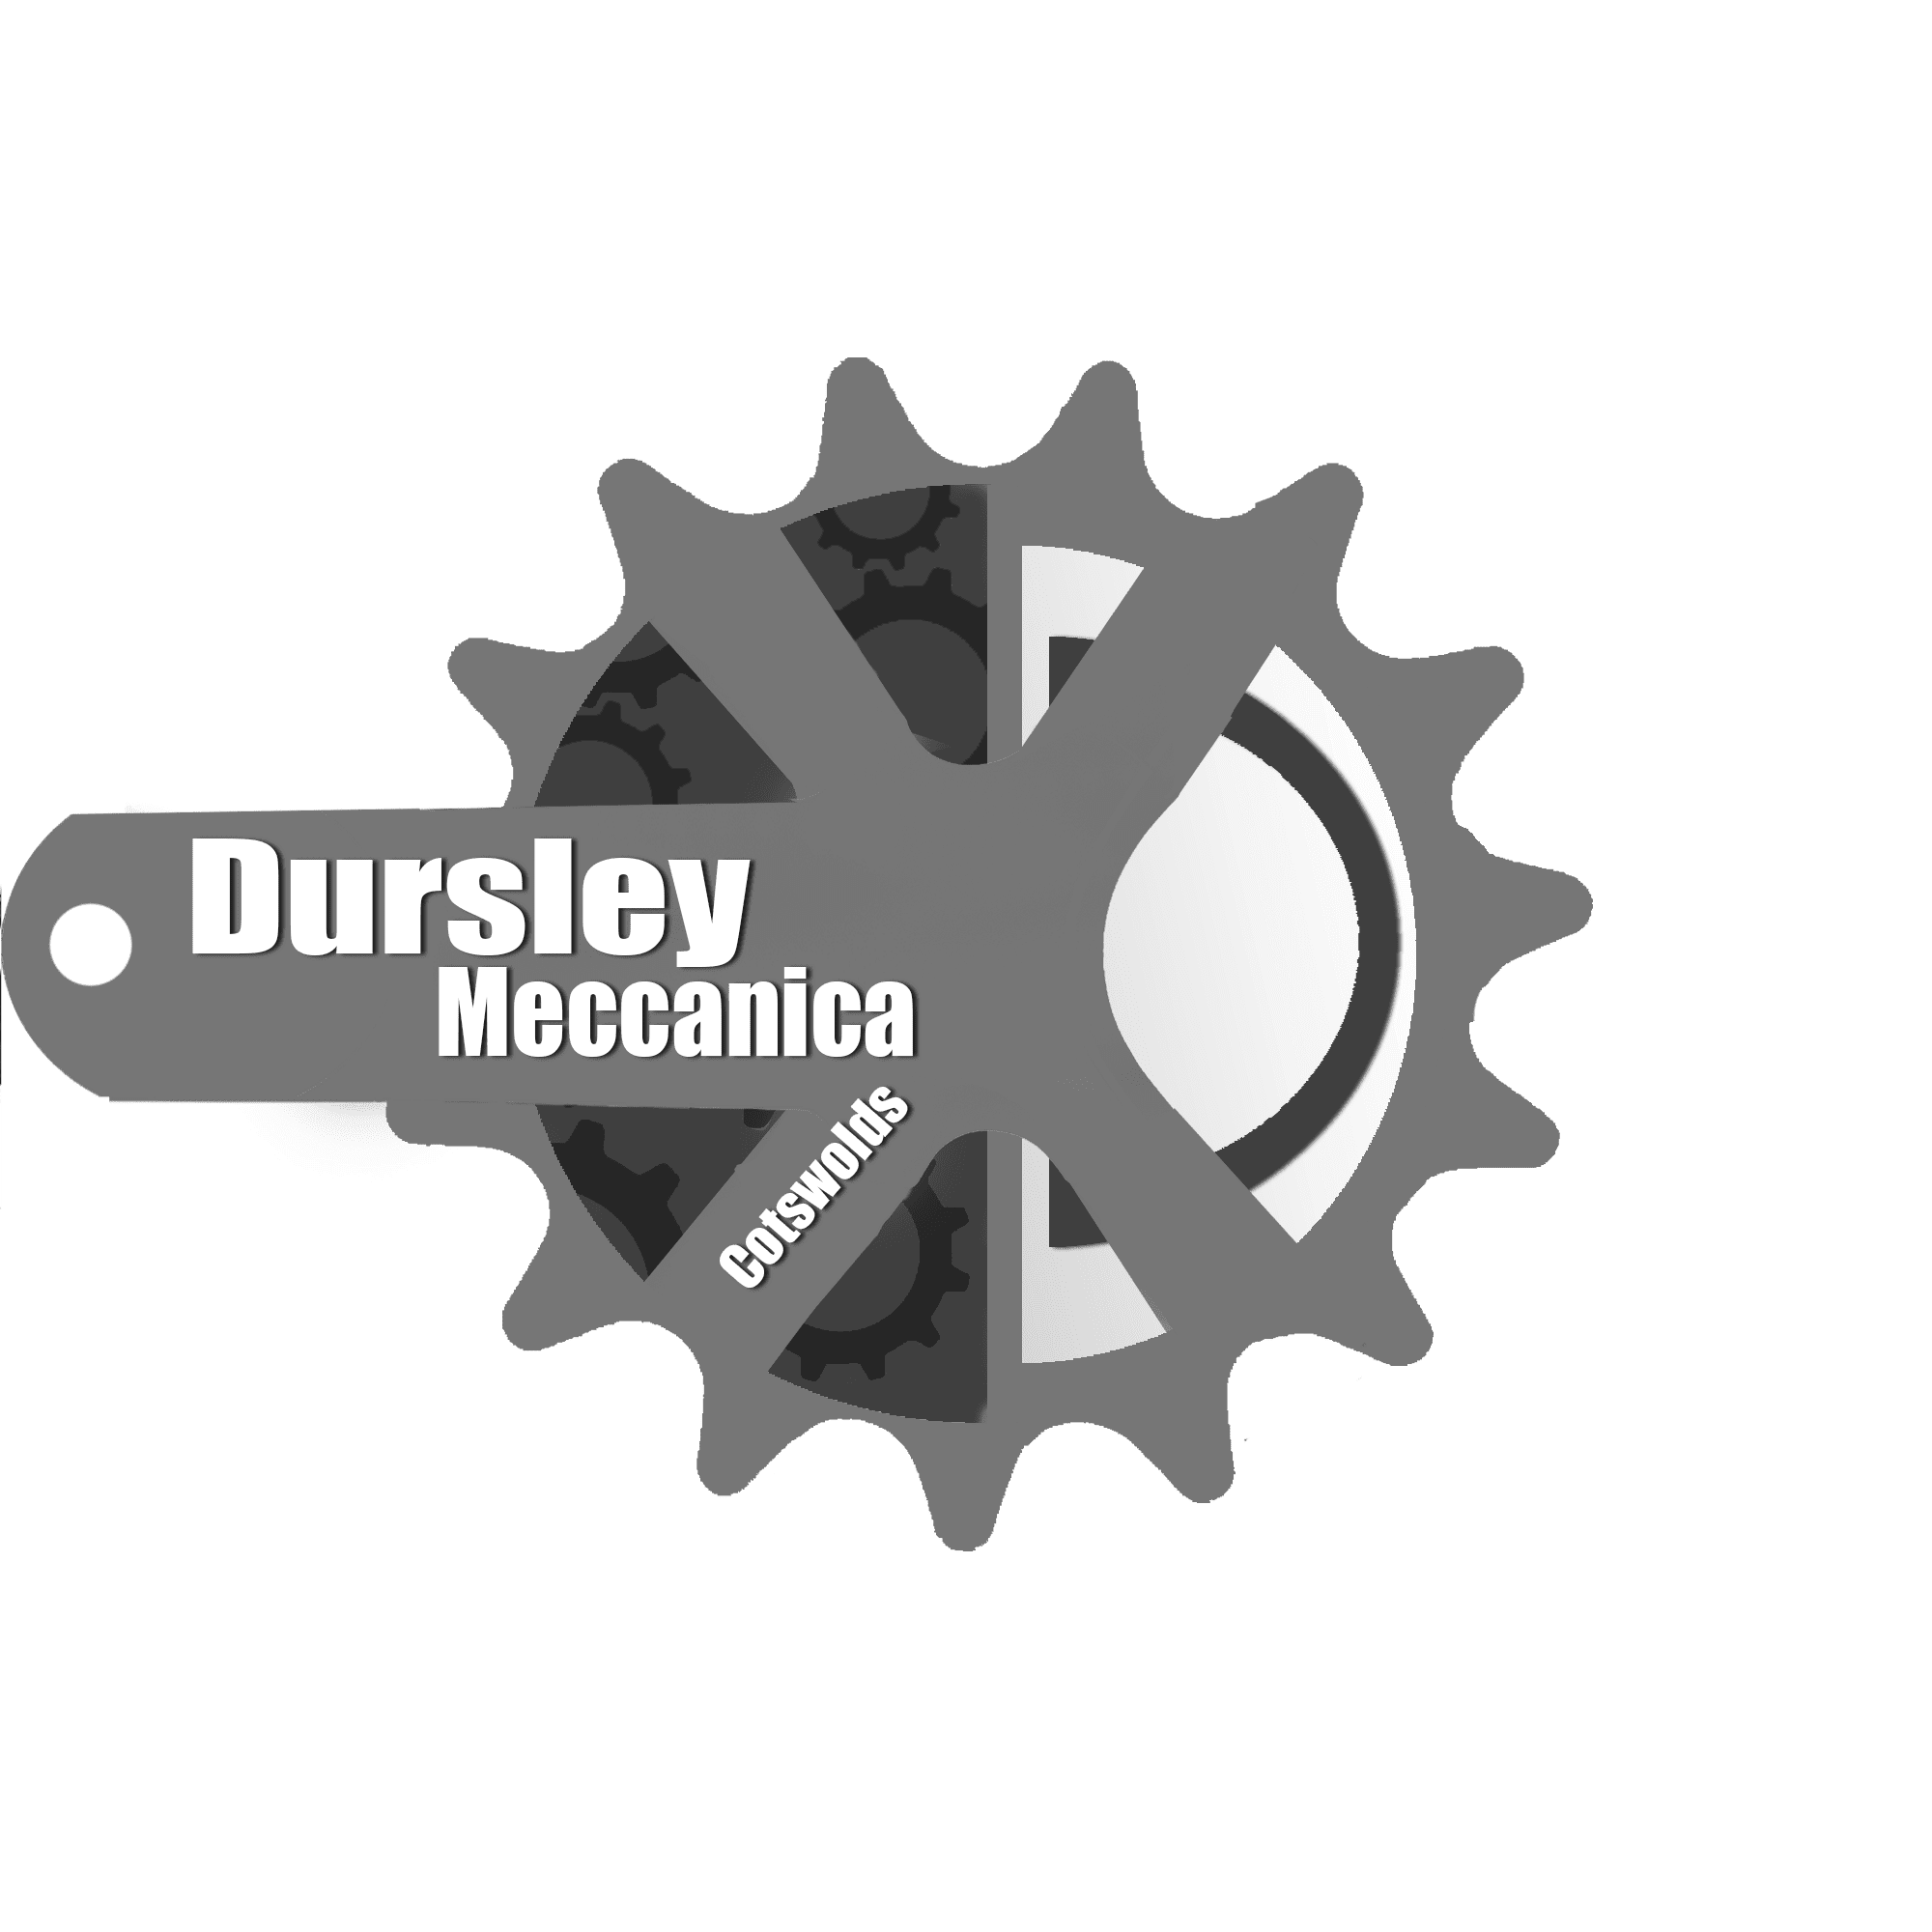 Dursley Meccanica Logo